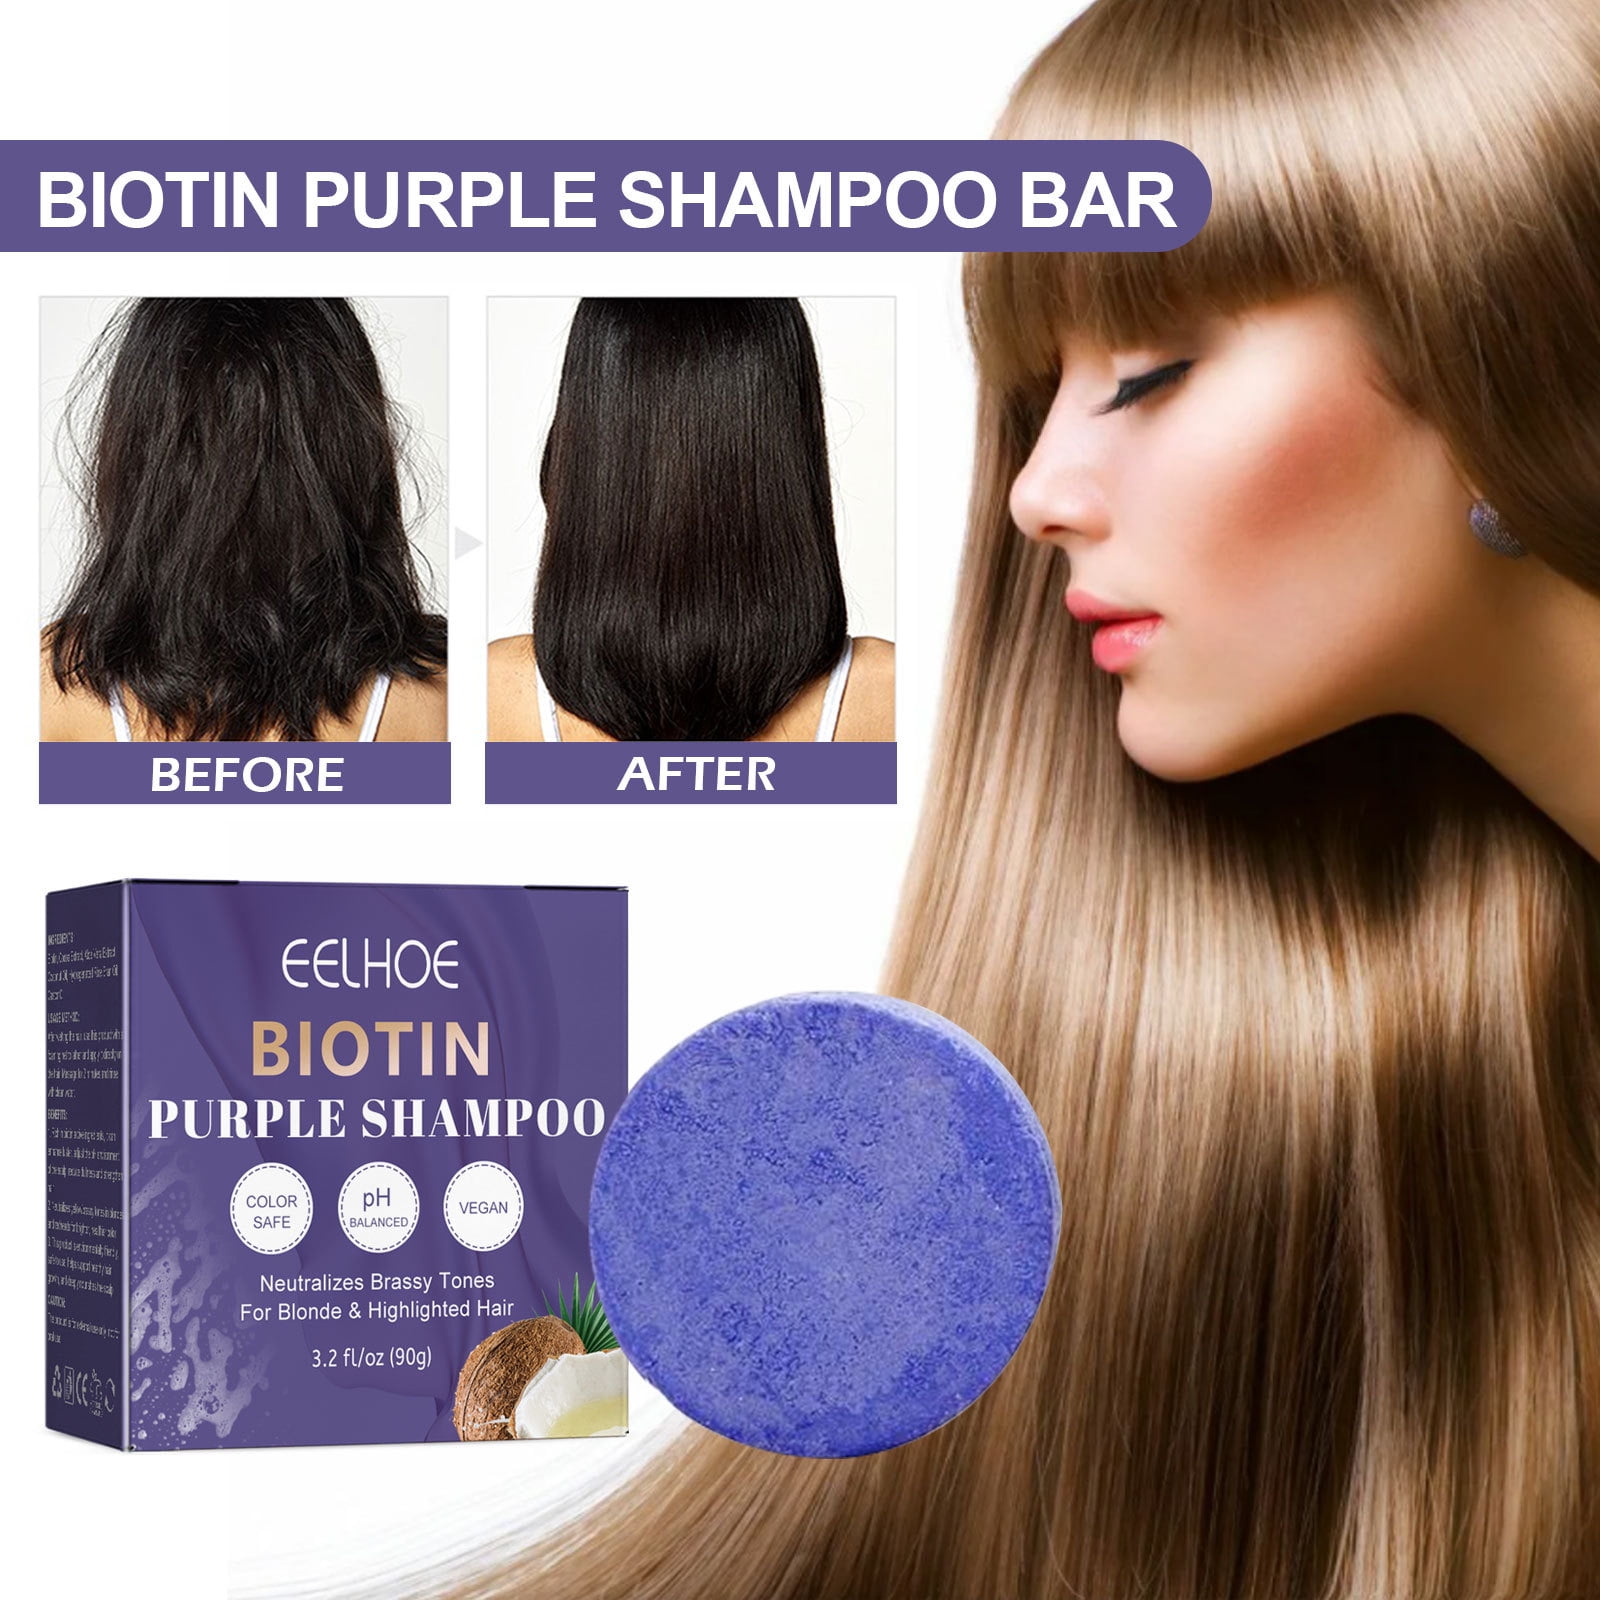 Kitsch Purple Shampoo Bar for Blonde Hair,Toning Purple Shampoo Bars with Biotin for Hair & Neutralizing Brassy Tones,Vegan Solid Shampoo Bar for Shine,Zero Waste - Walmart.com